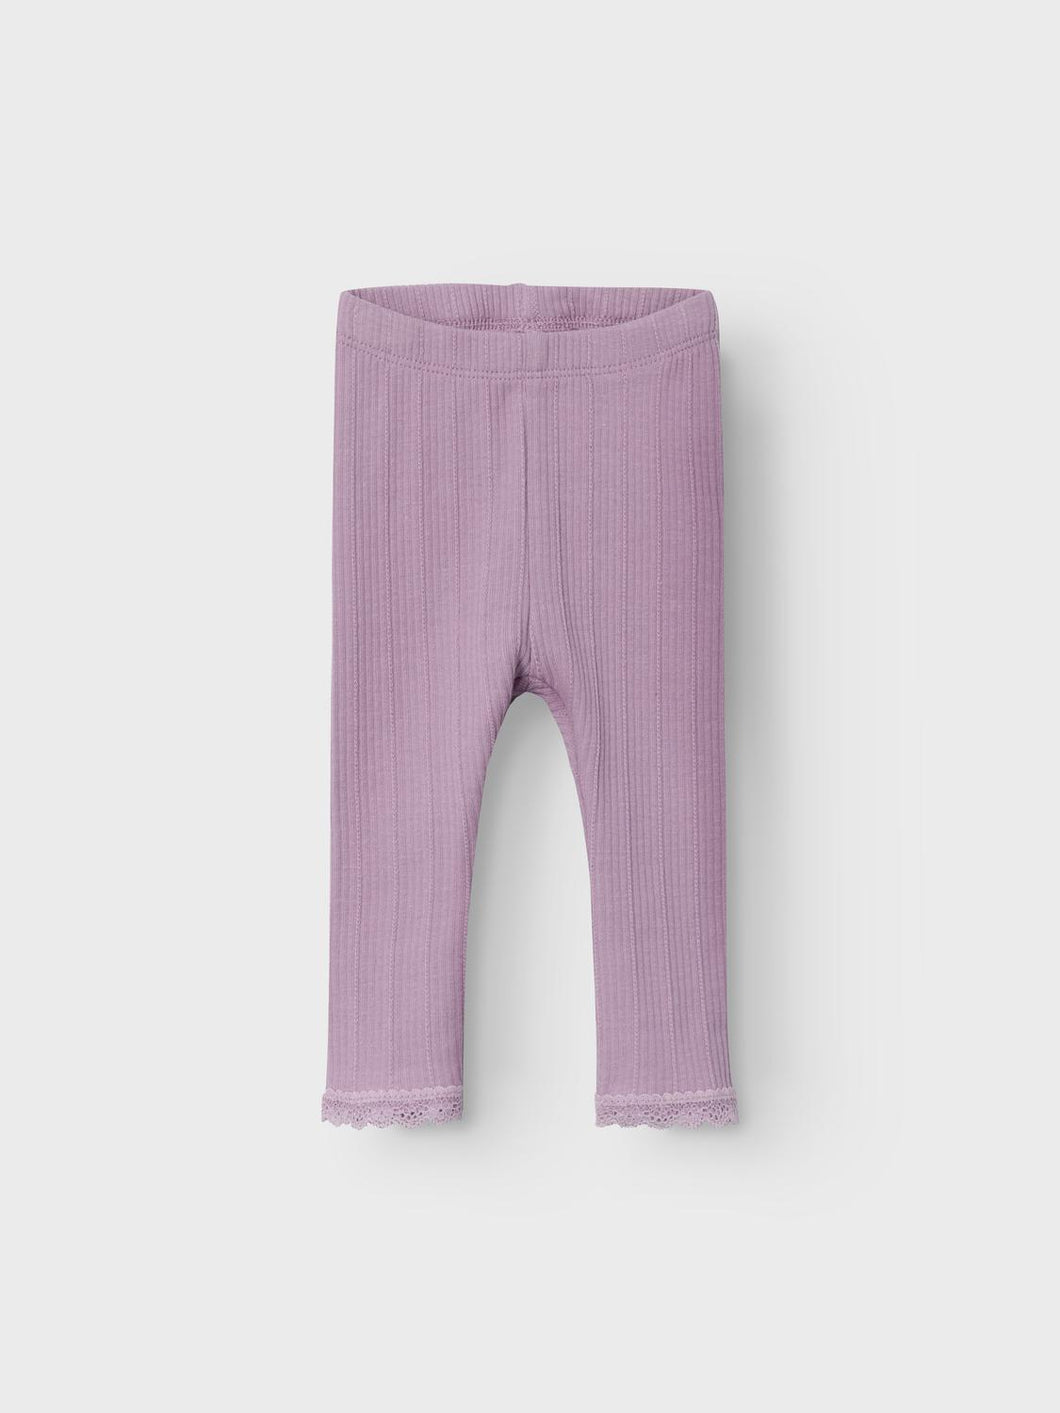 NBFRANIE Trousers - Lavender Mist